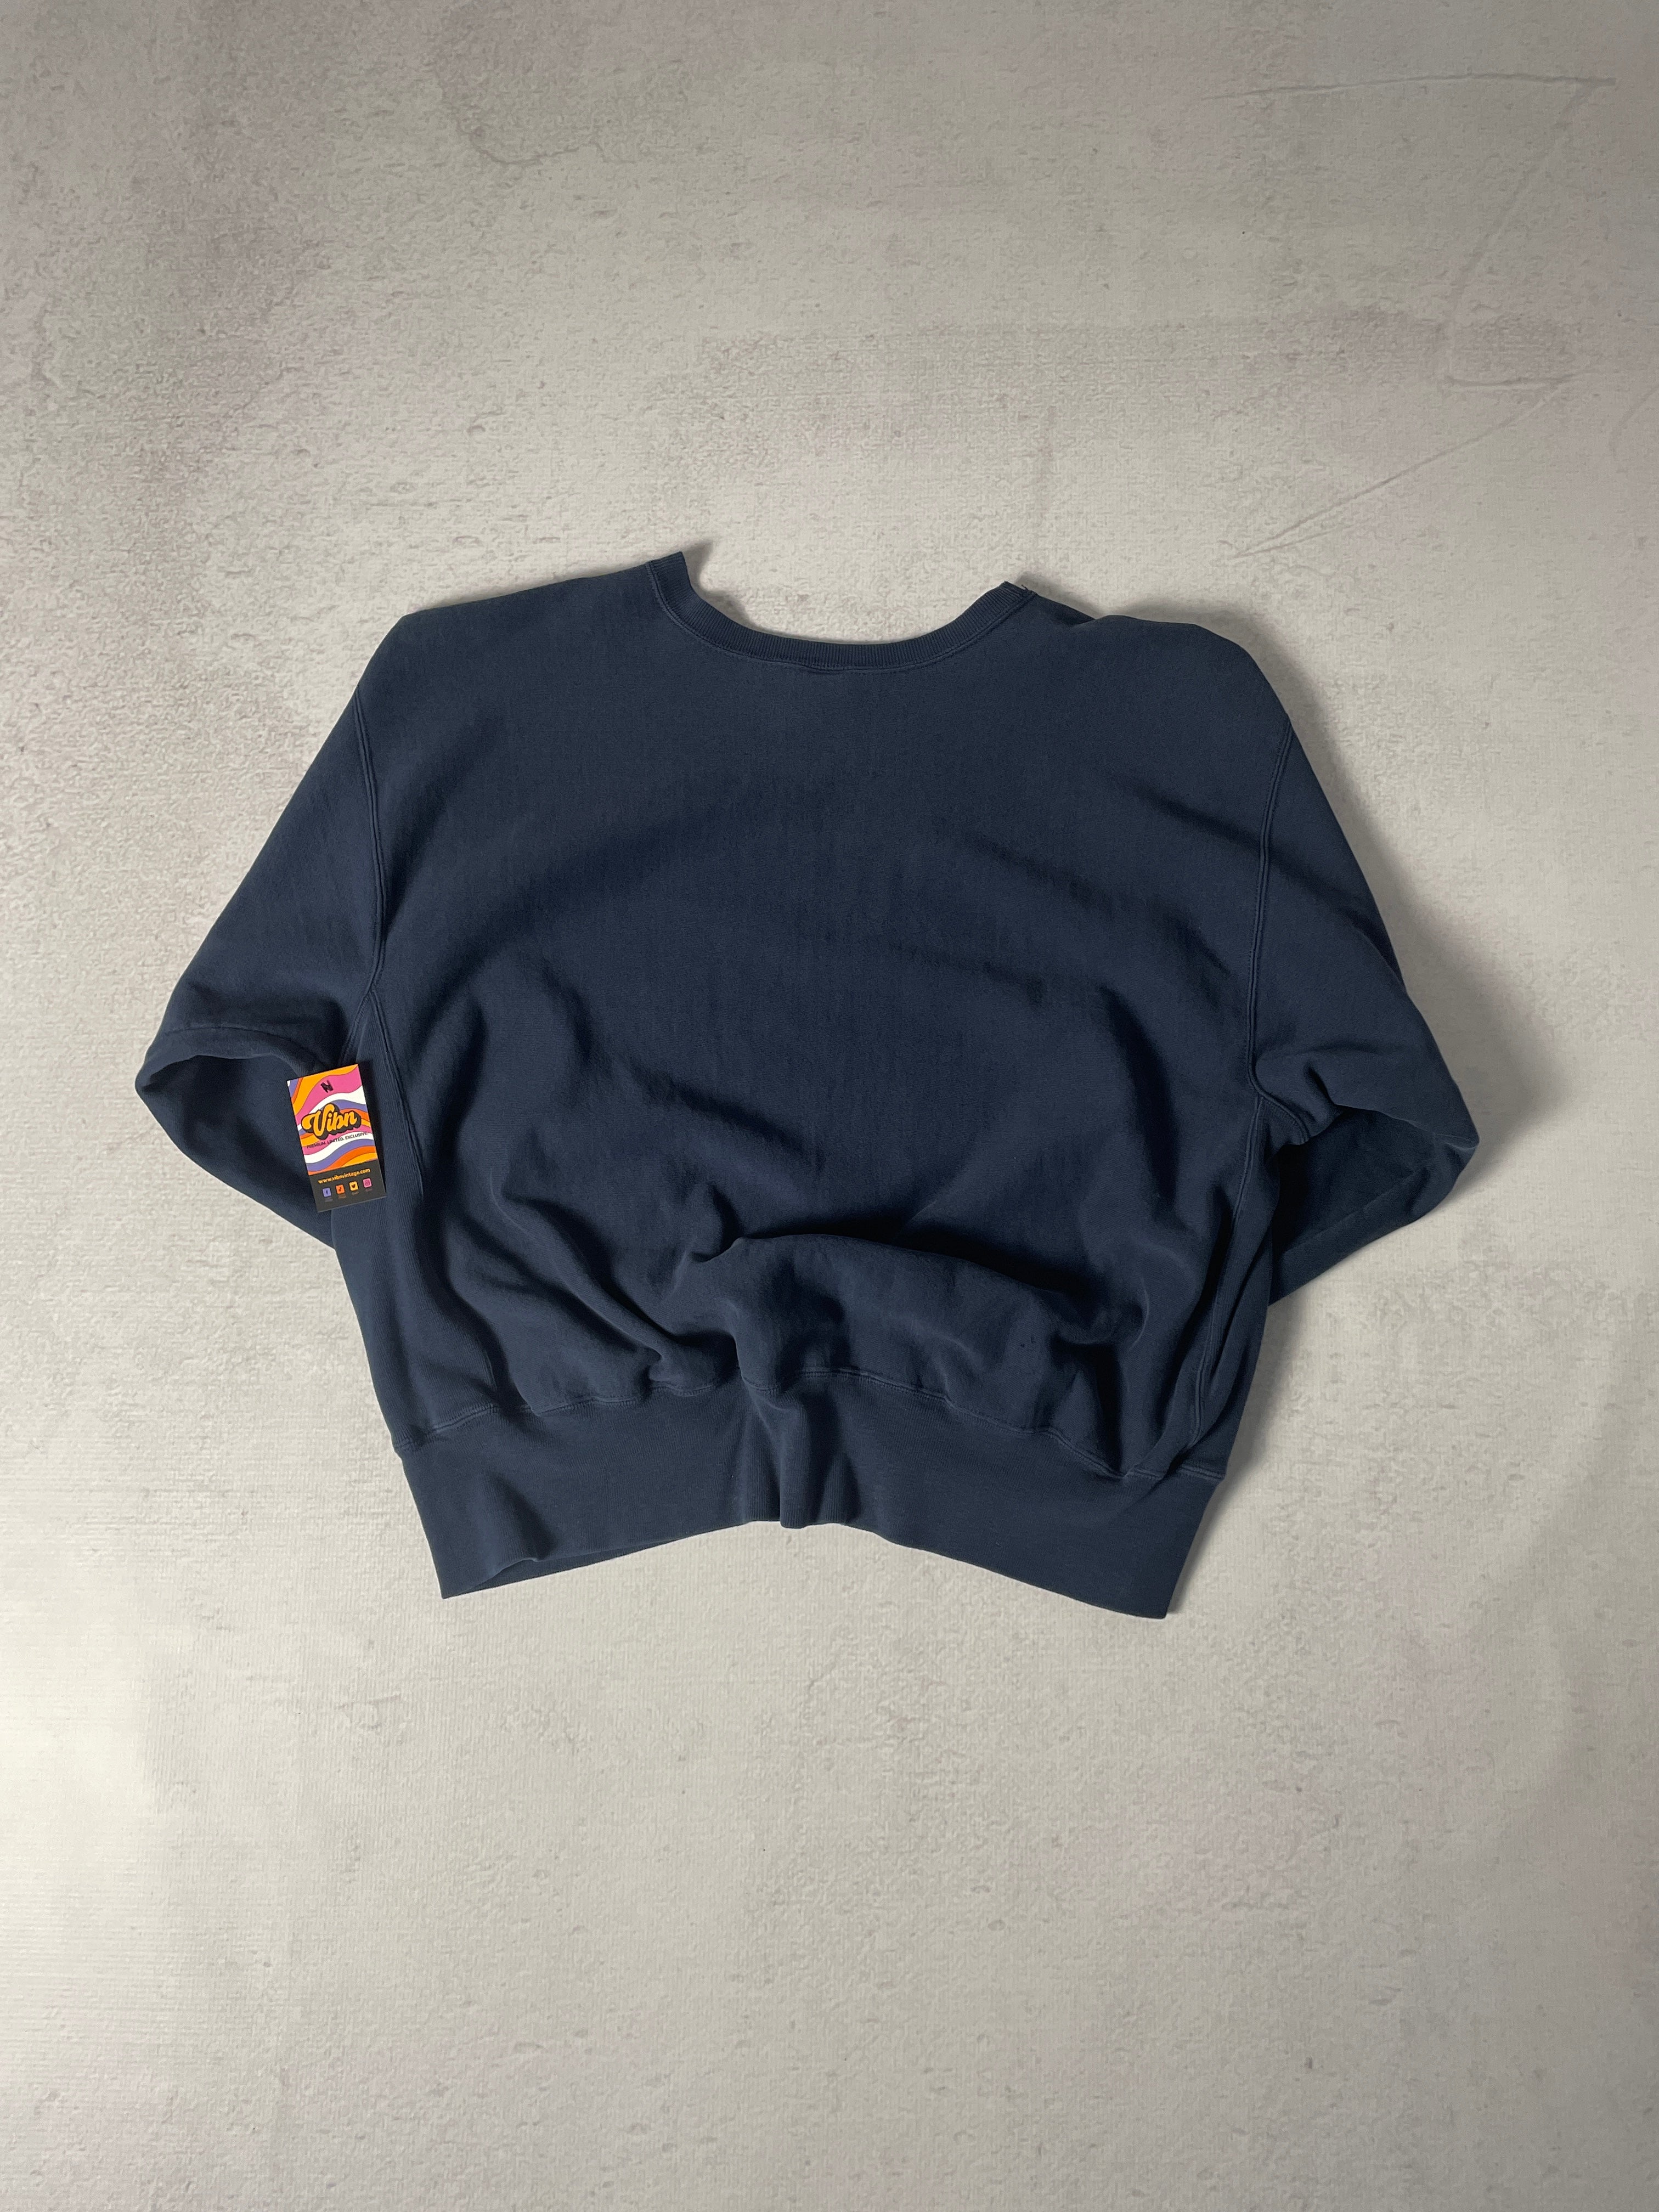 Vintage Champion Reverse Weave Crewneck Sweatshirt - Men's 2XL